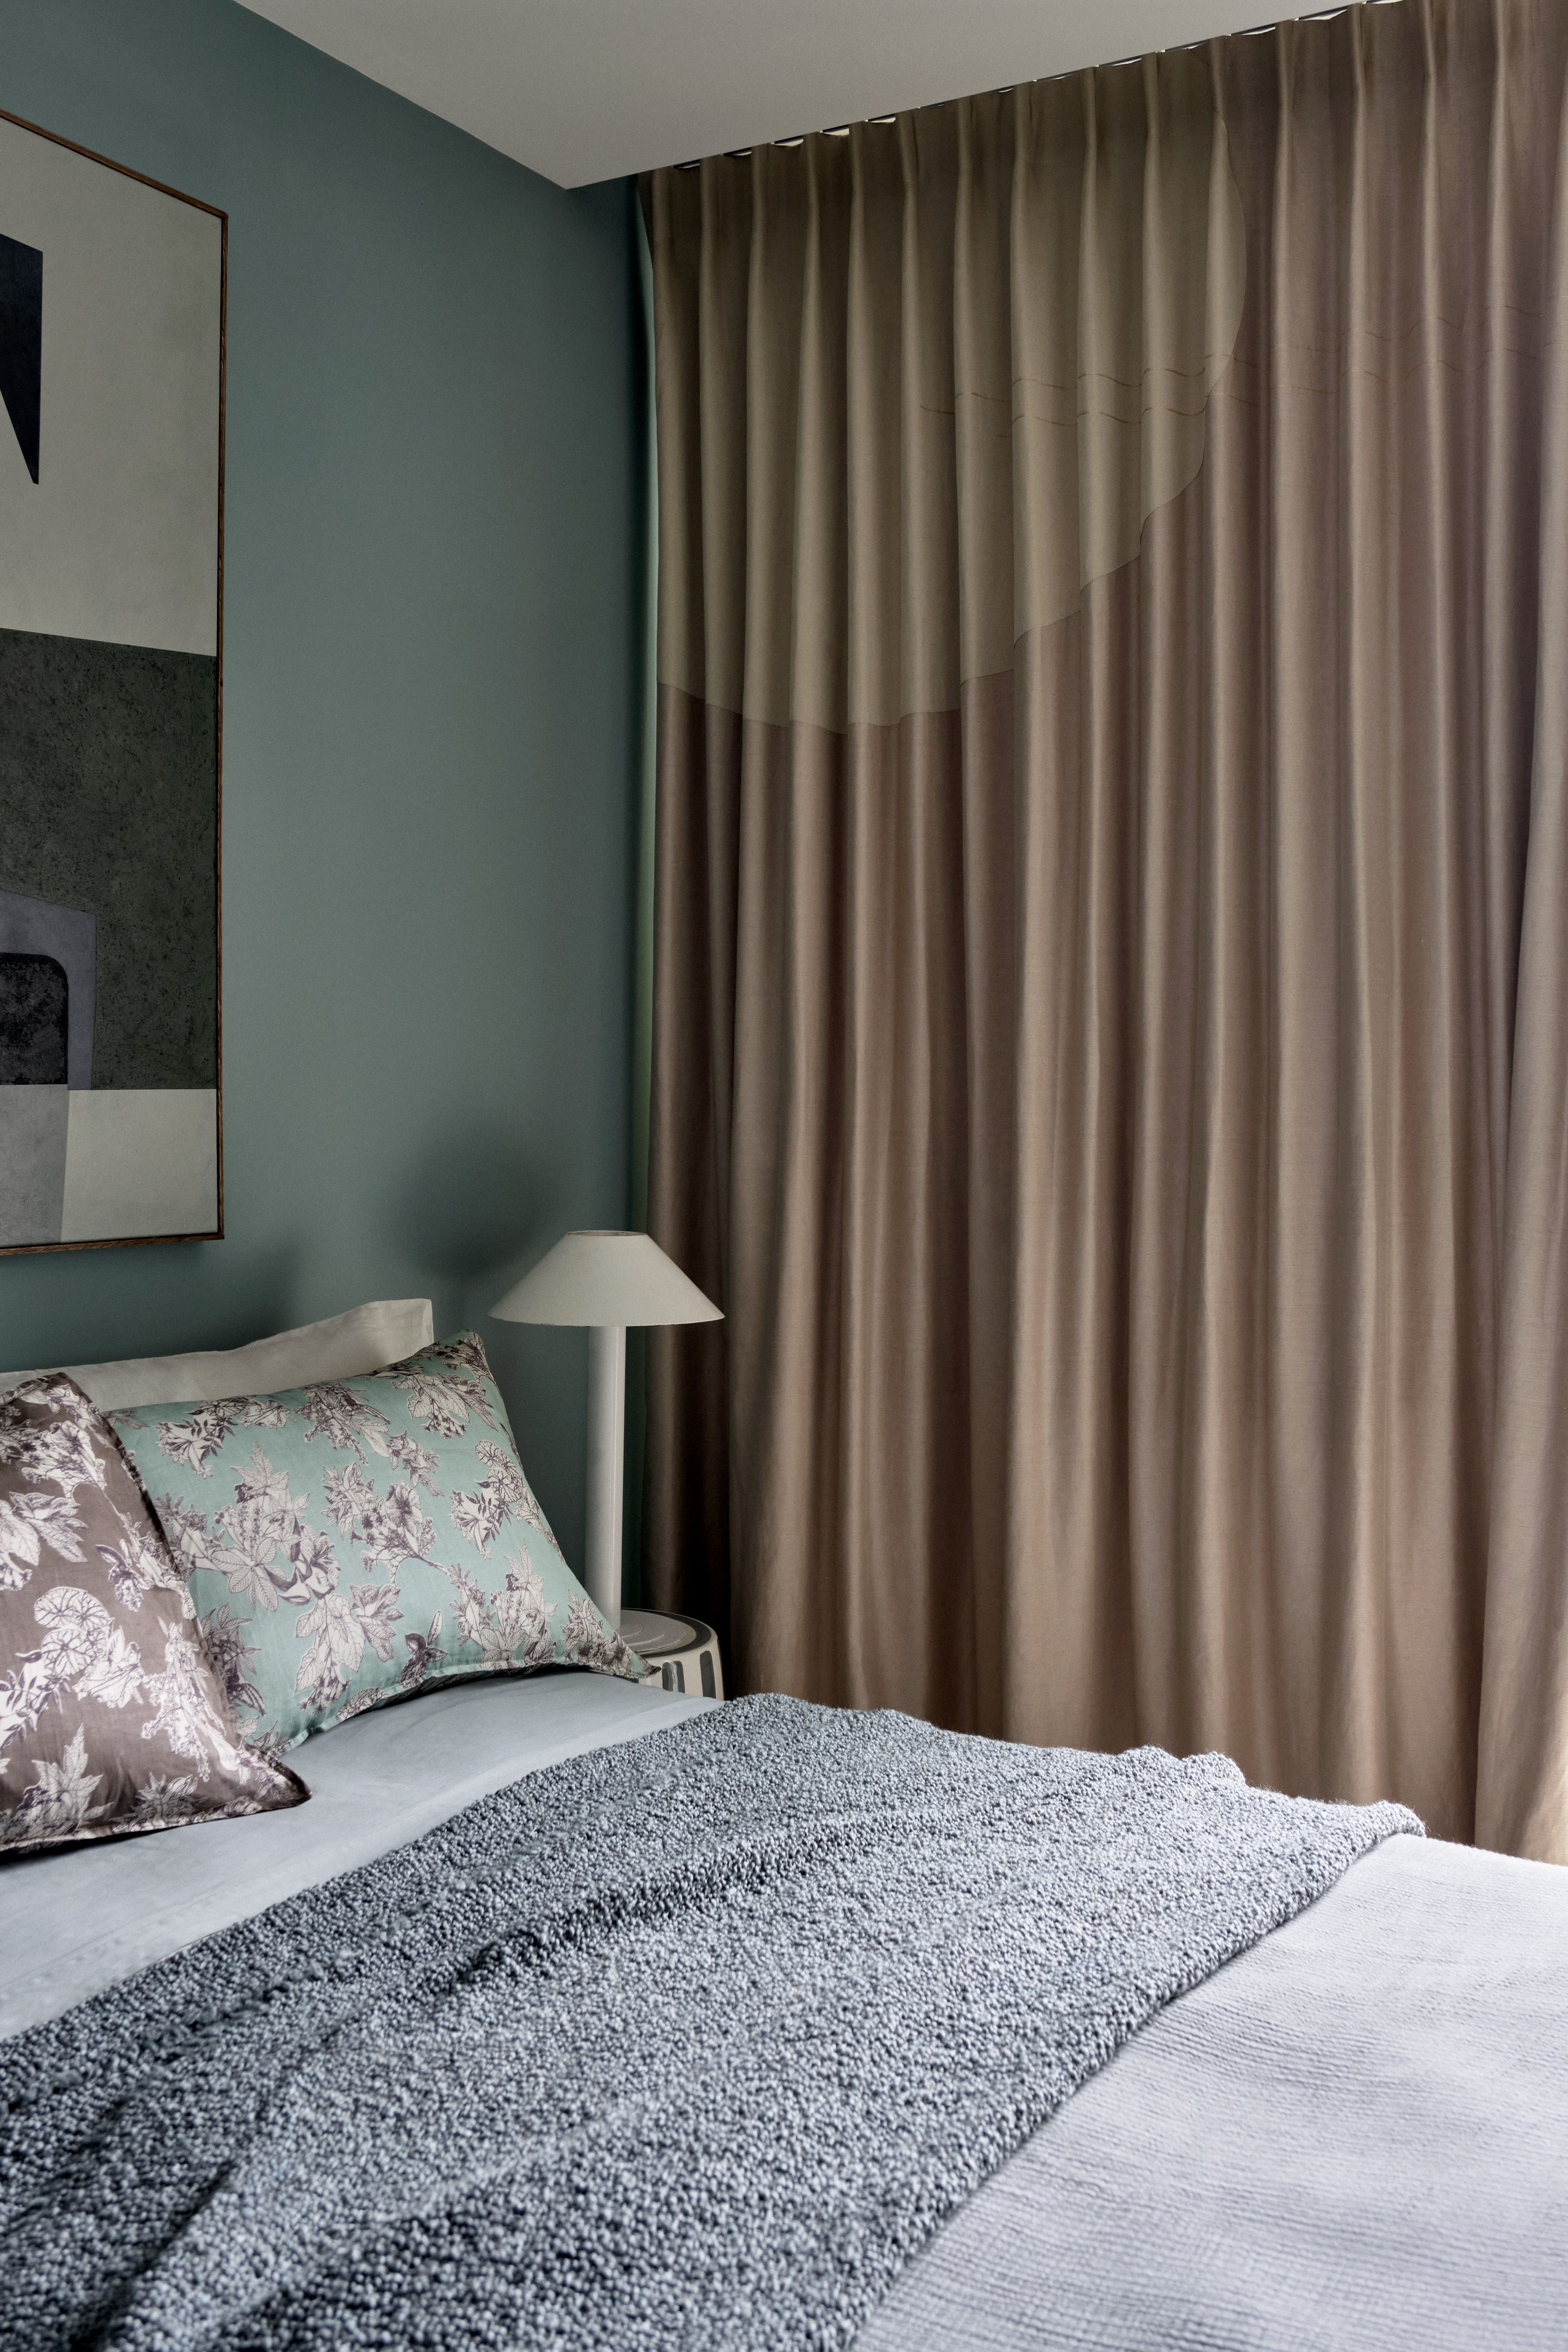 20 modern bedroom ideas for sleeping in style